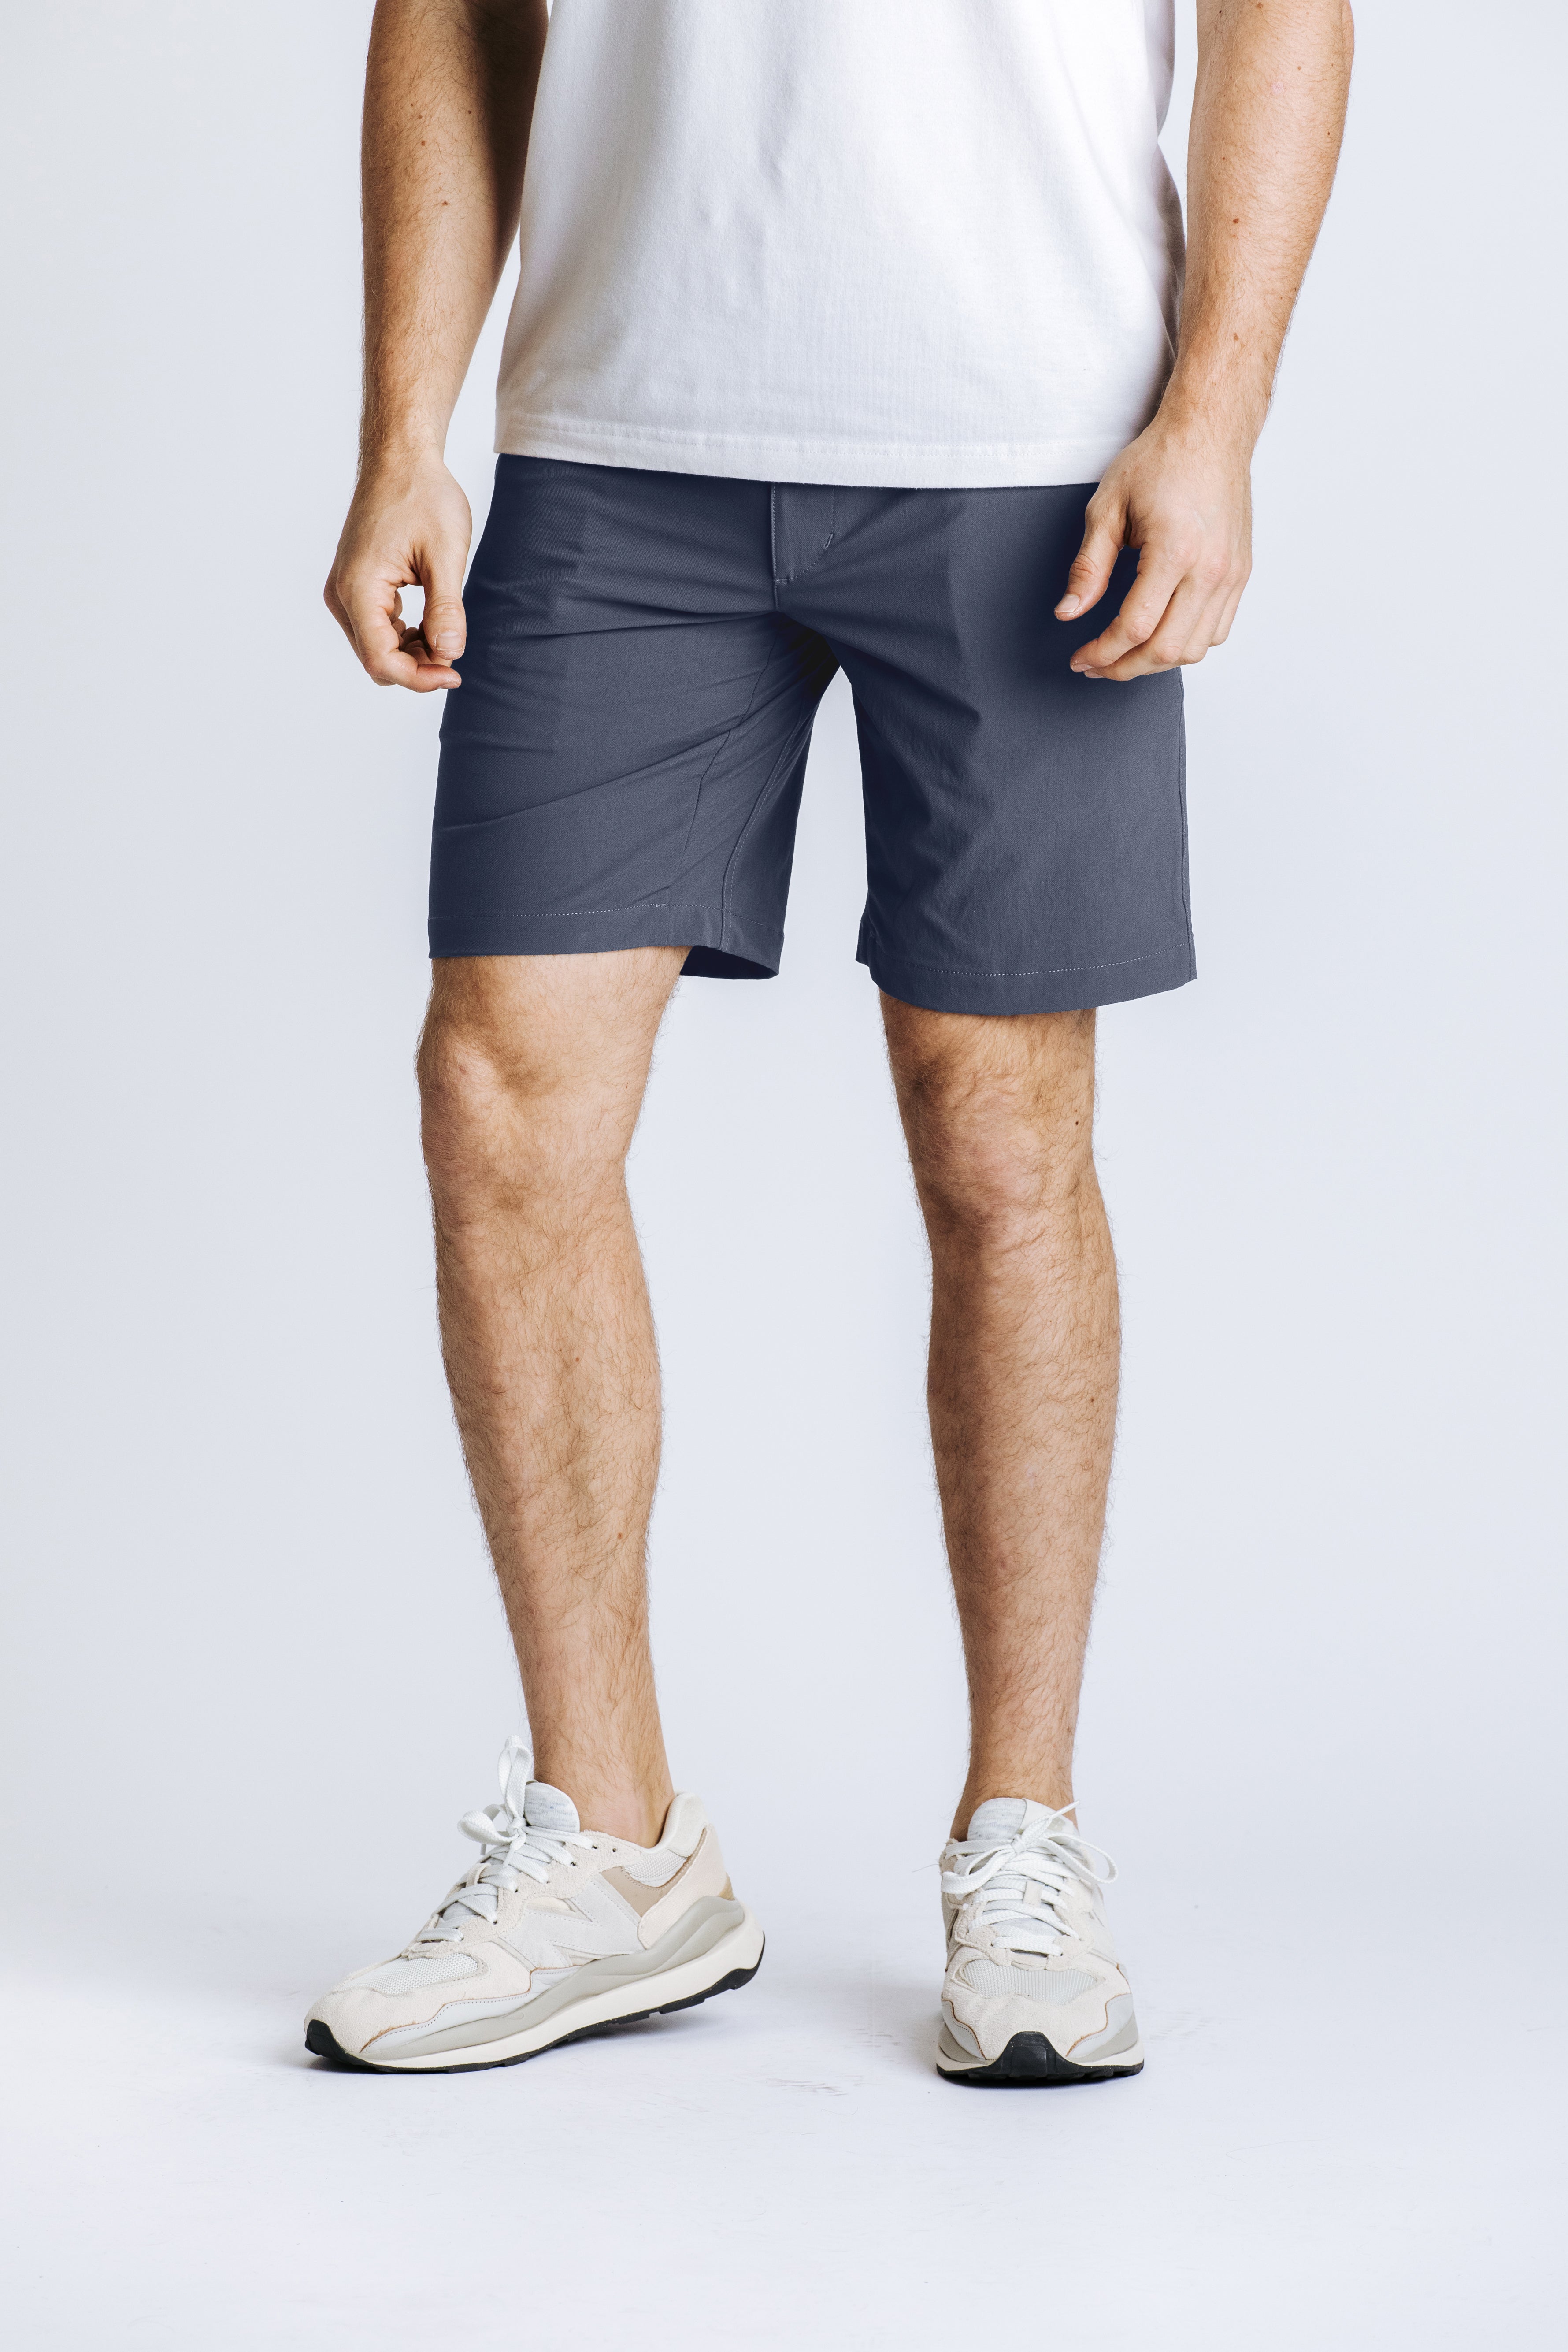 Evolution Shorts - Blue grey
